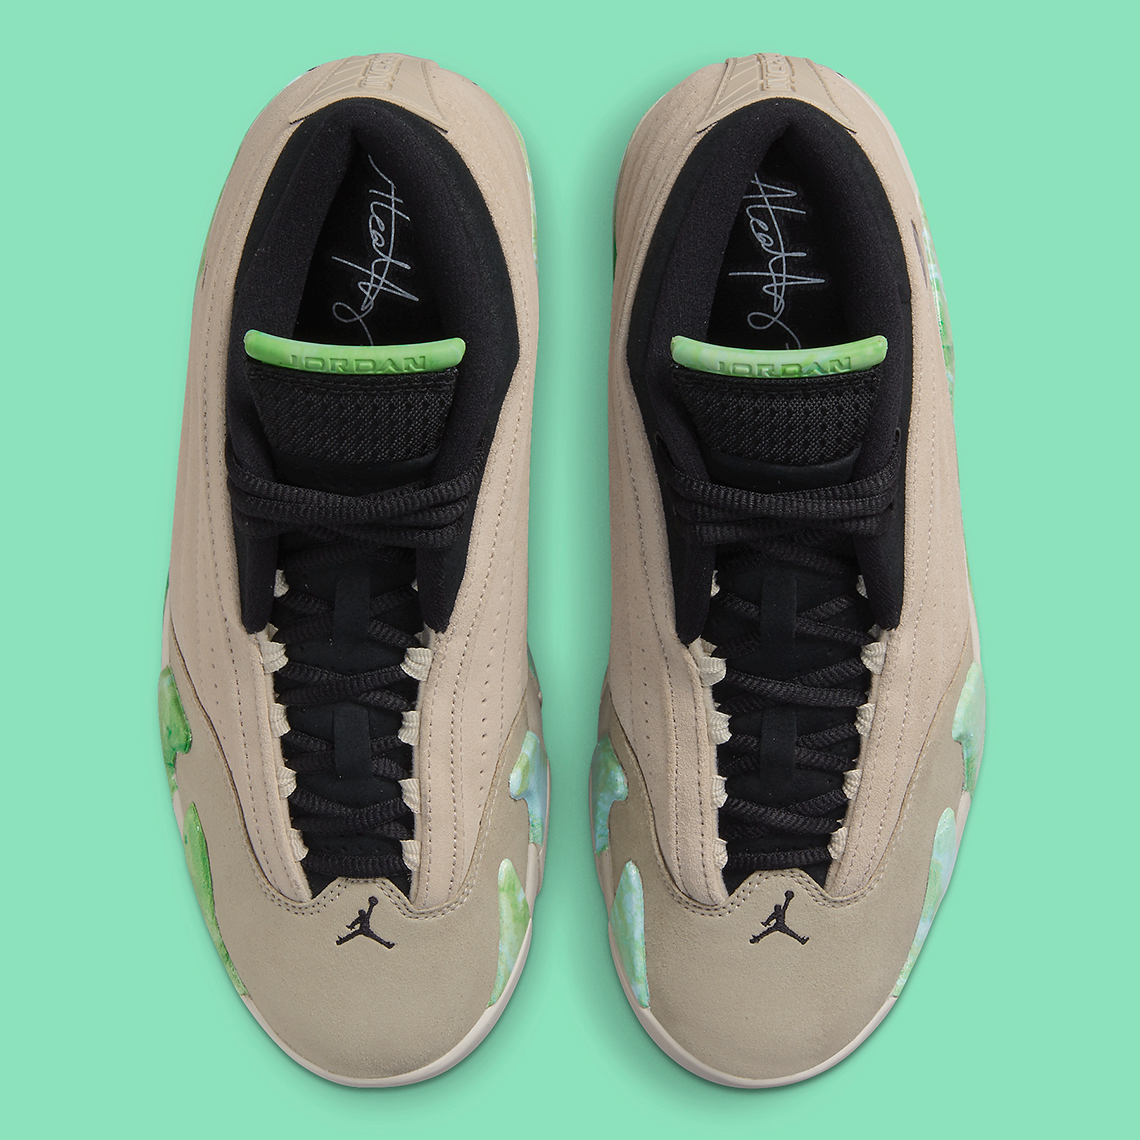 Air Jordan 13 Flint Shirts OMG Sneakers Low Aleali May Dj1034 200 Release Date 7